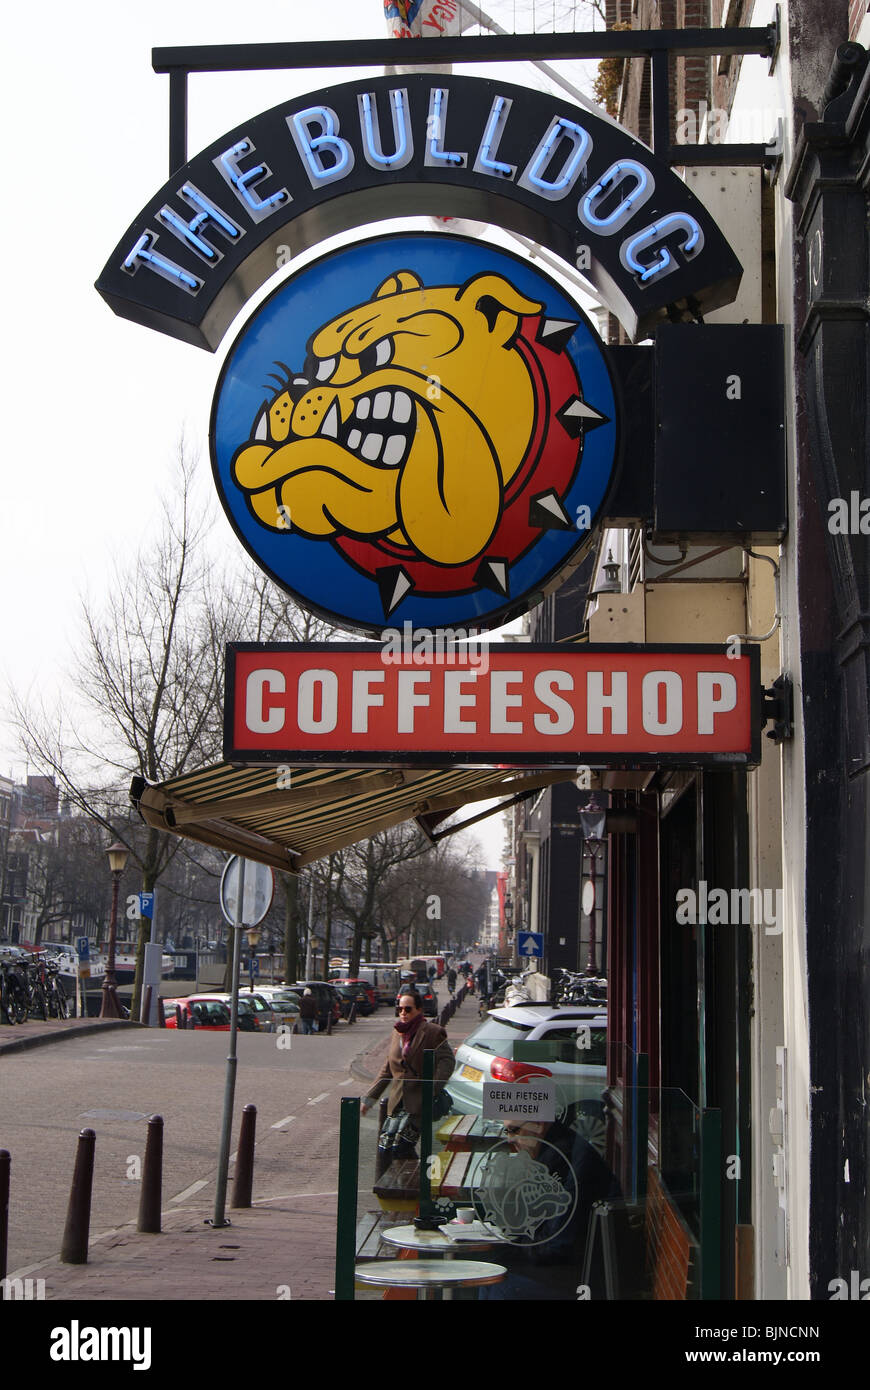 the bulldog coffeeshop amsterdam Stock Photo - Alamy